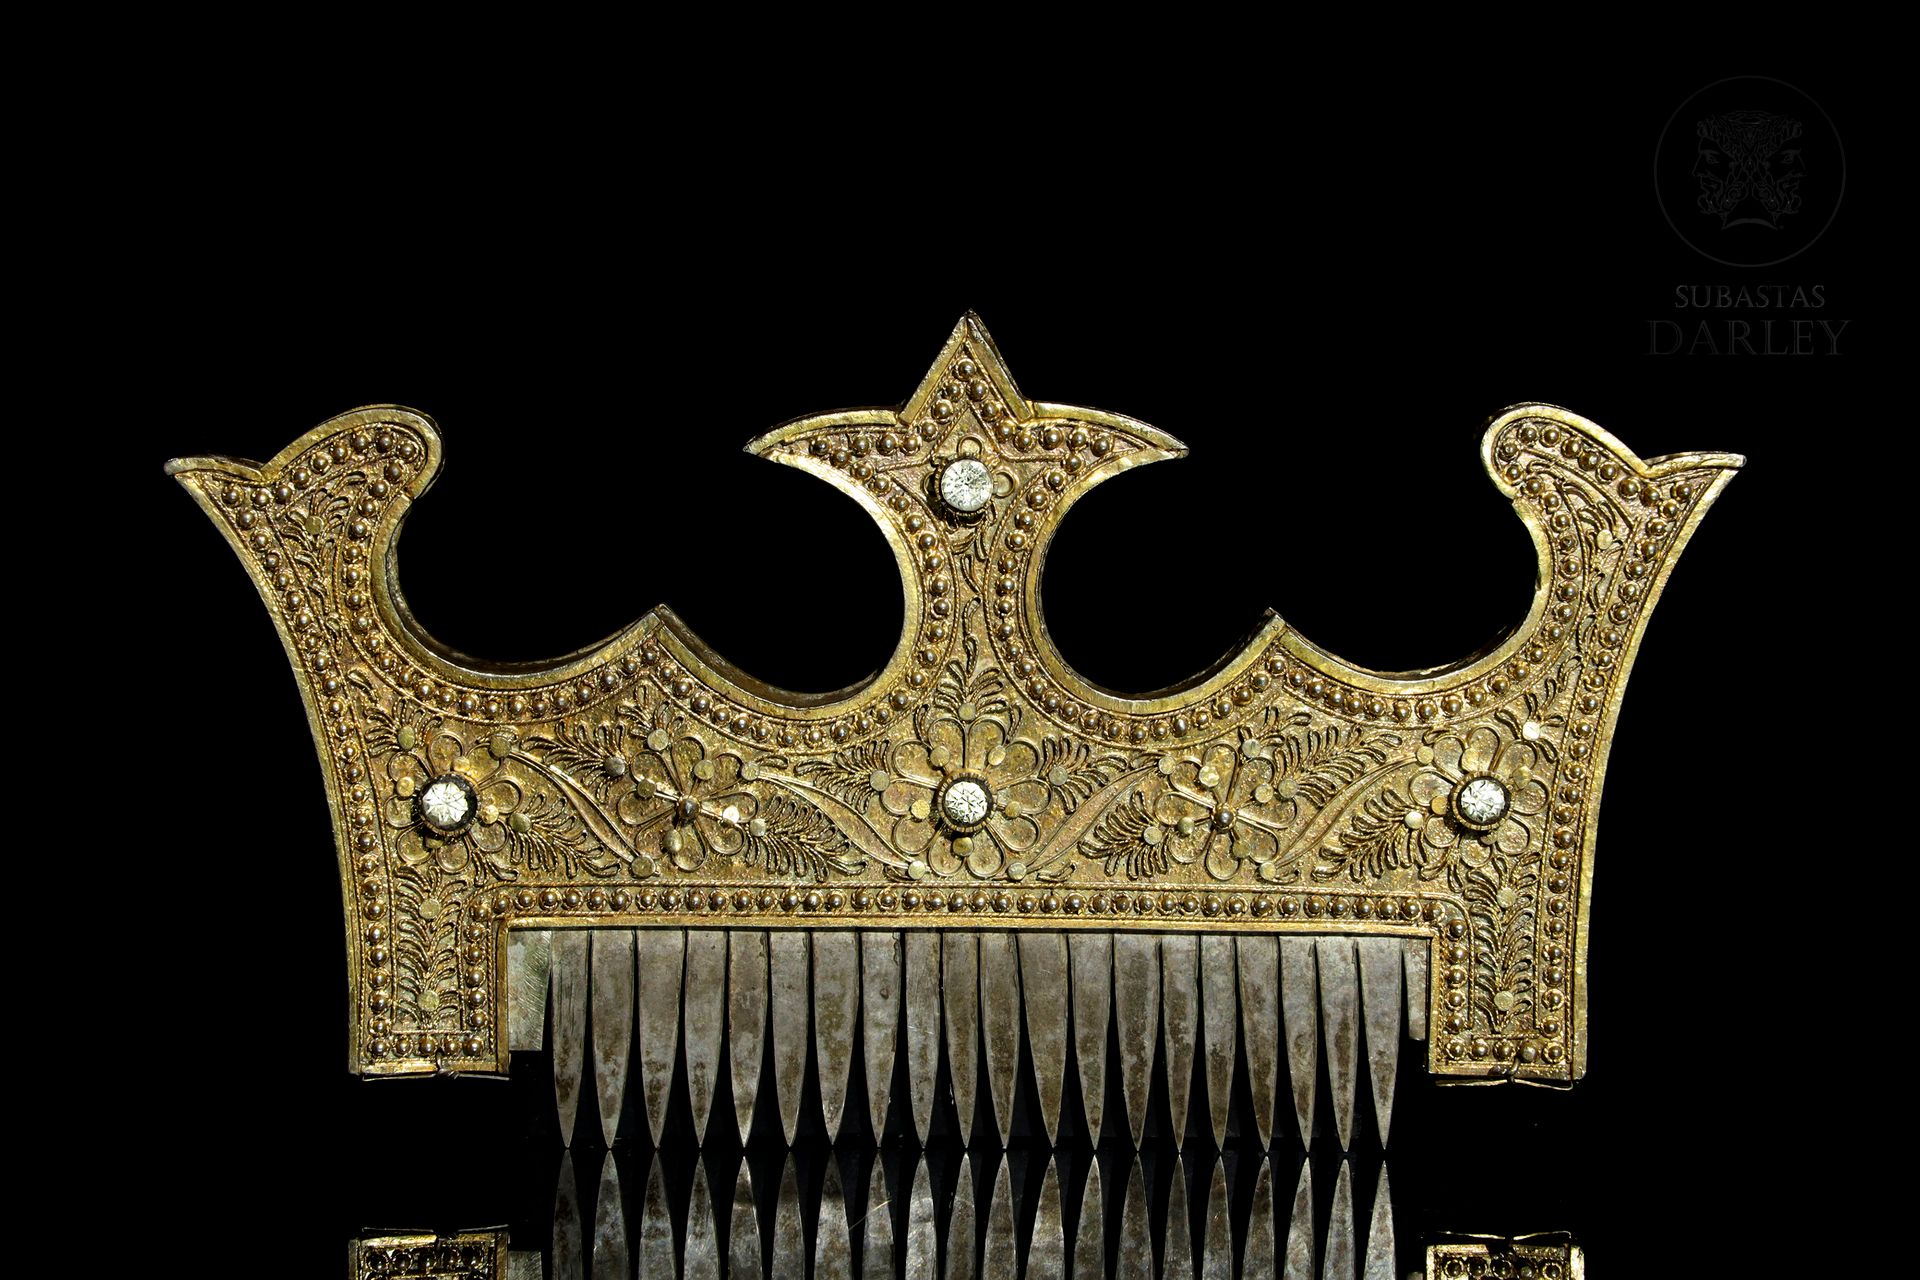 Peineta de plata dorada y circón, Indonesia, S.XIX - XX 
Peigne au profil découp&hellip;